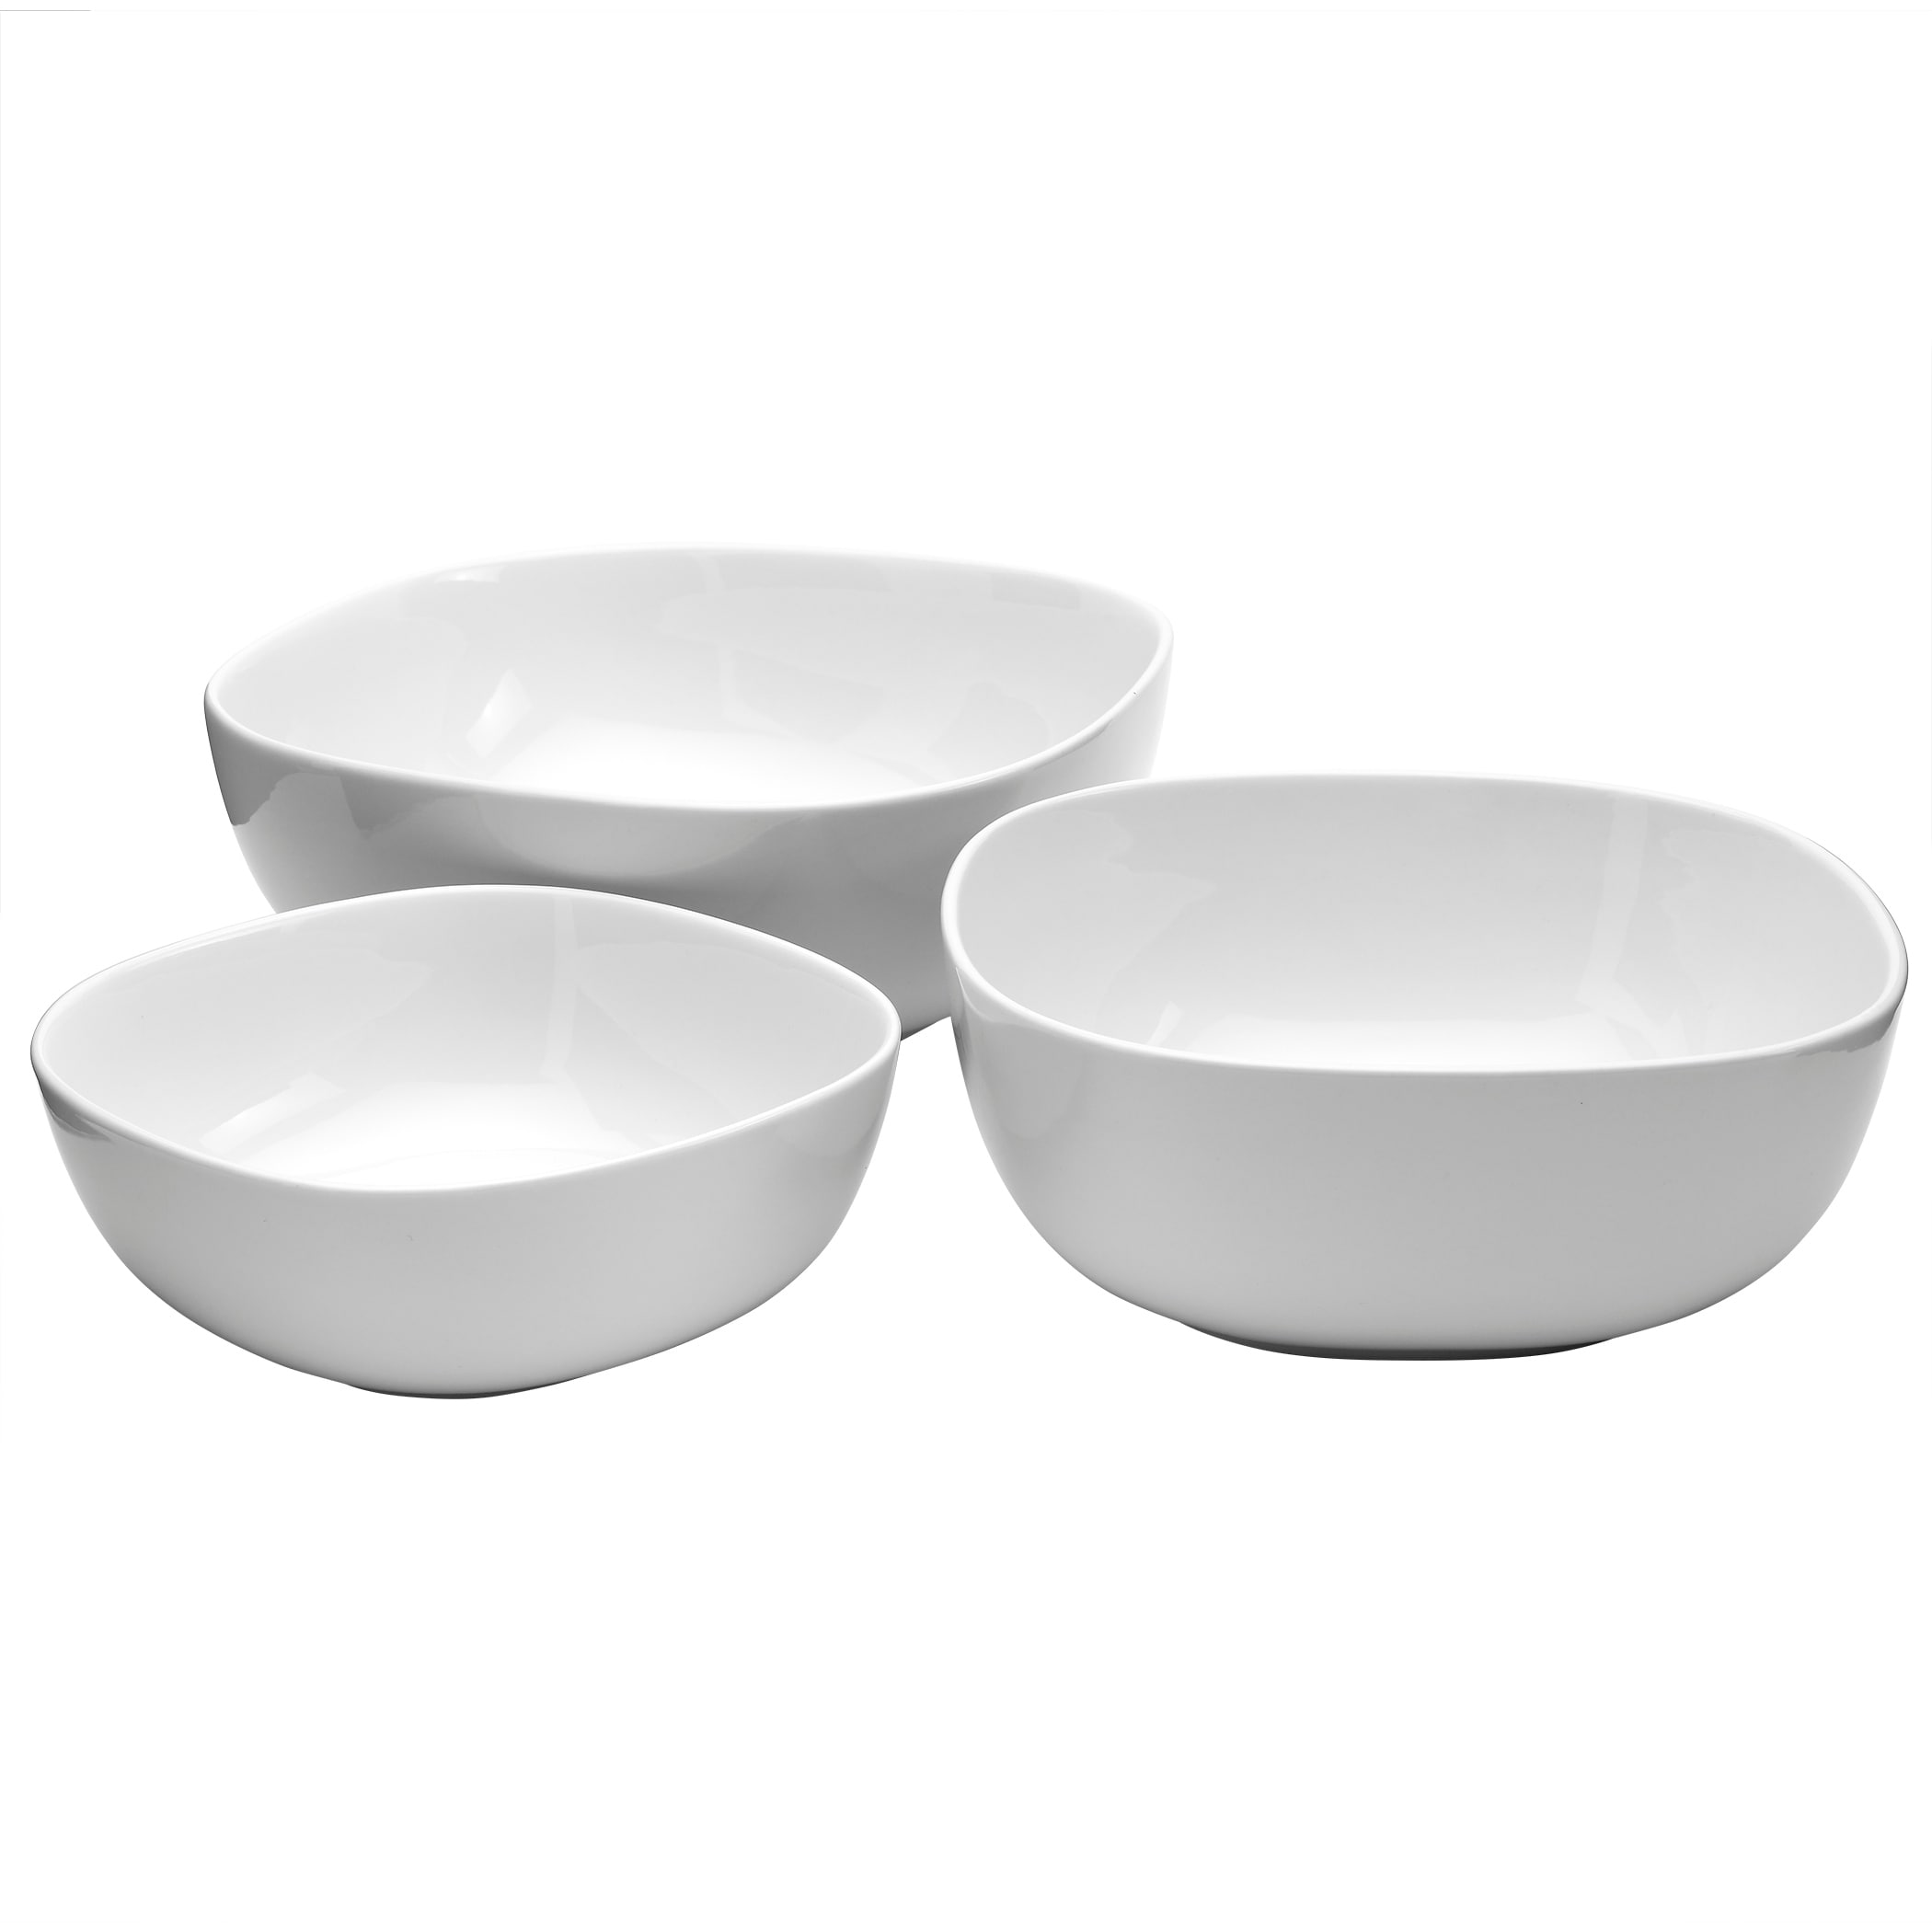 https://ak1.ostkcdn.com/images/products/is/images/direct/1d480820002253b8e84fedd7893356313f87cef6/Denmark-3PC-White-Porcelain-Soft-Square-Serving-Bowl.jpg